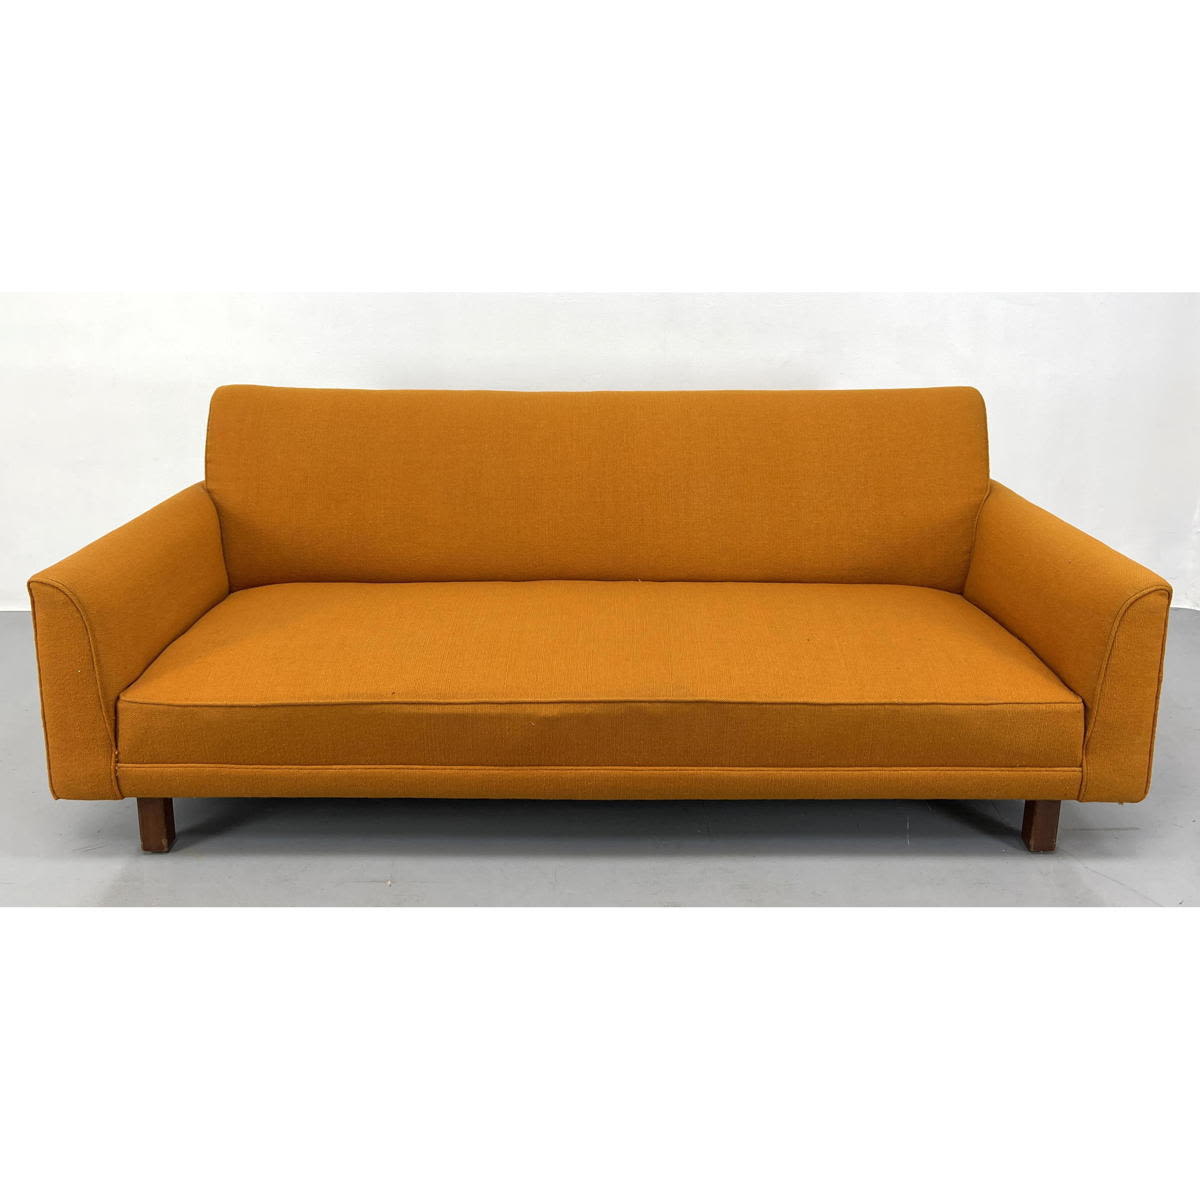 Orange Fabric Modernist Sofa Couch  2a784f